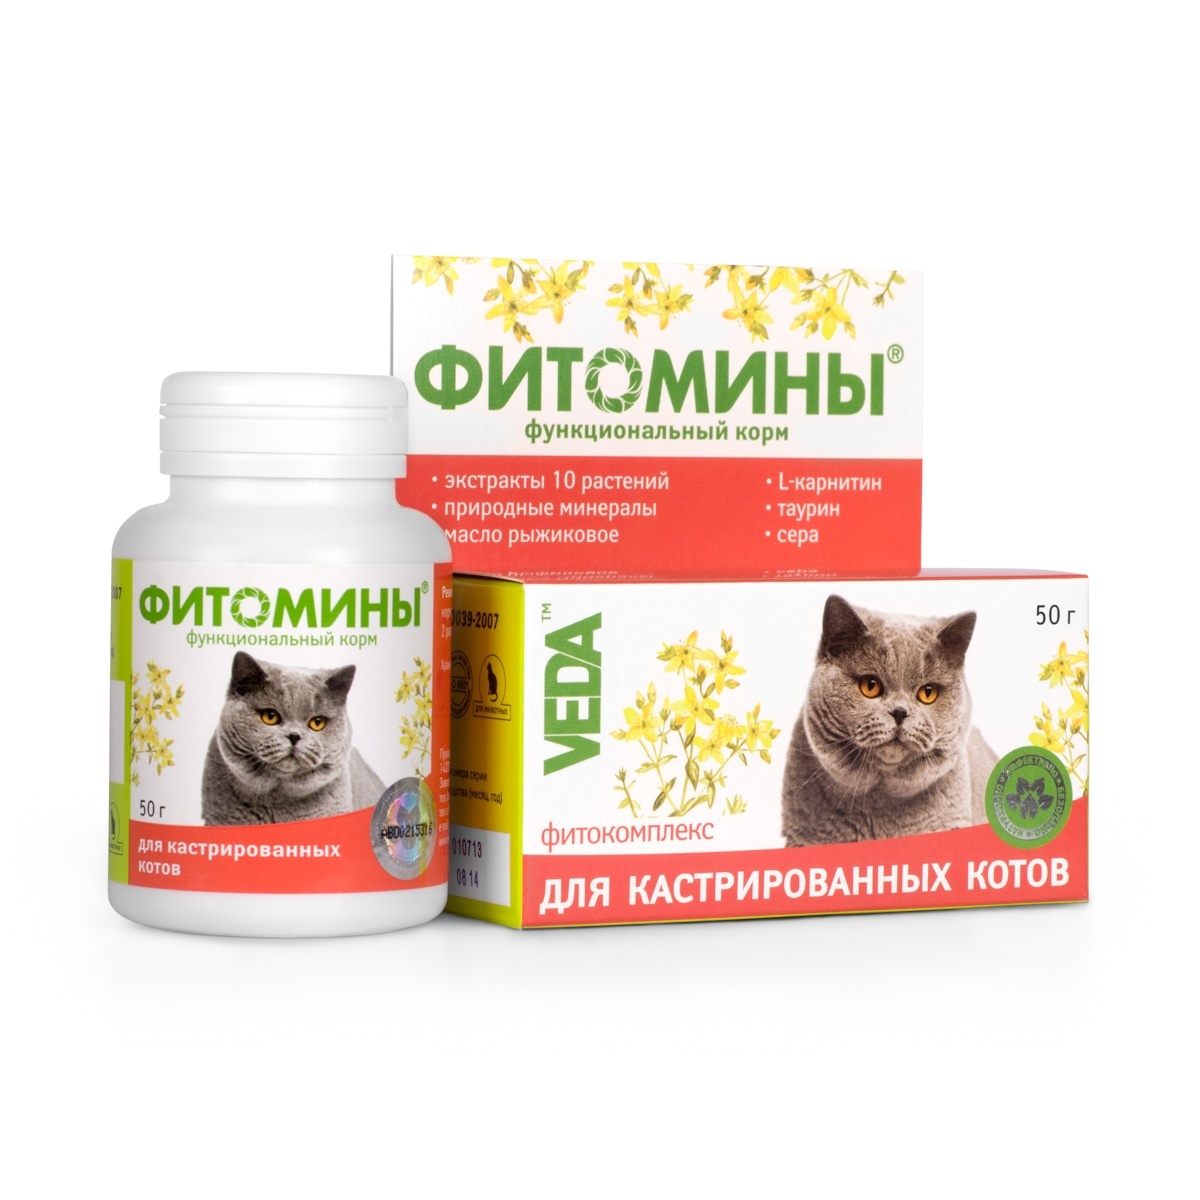 Веда Веда фитомины для кастрированных котов, 100 таб. (50 г) веда фитомины от аллергий собака 100таб 0 05 кг 12526